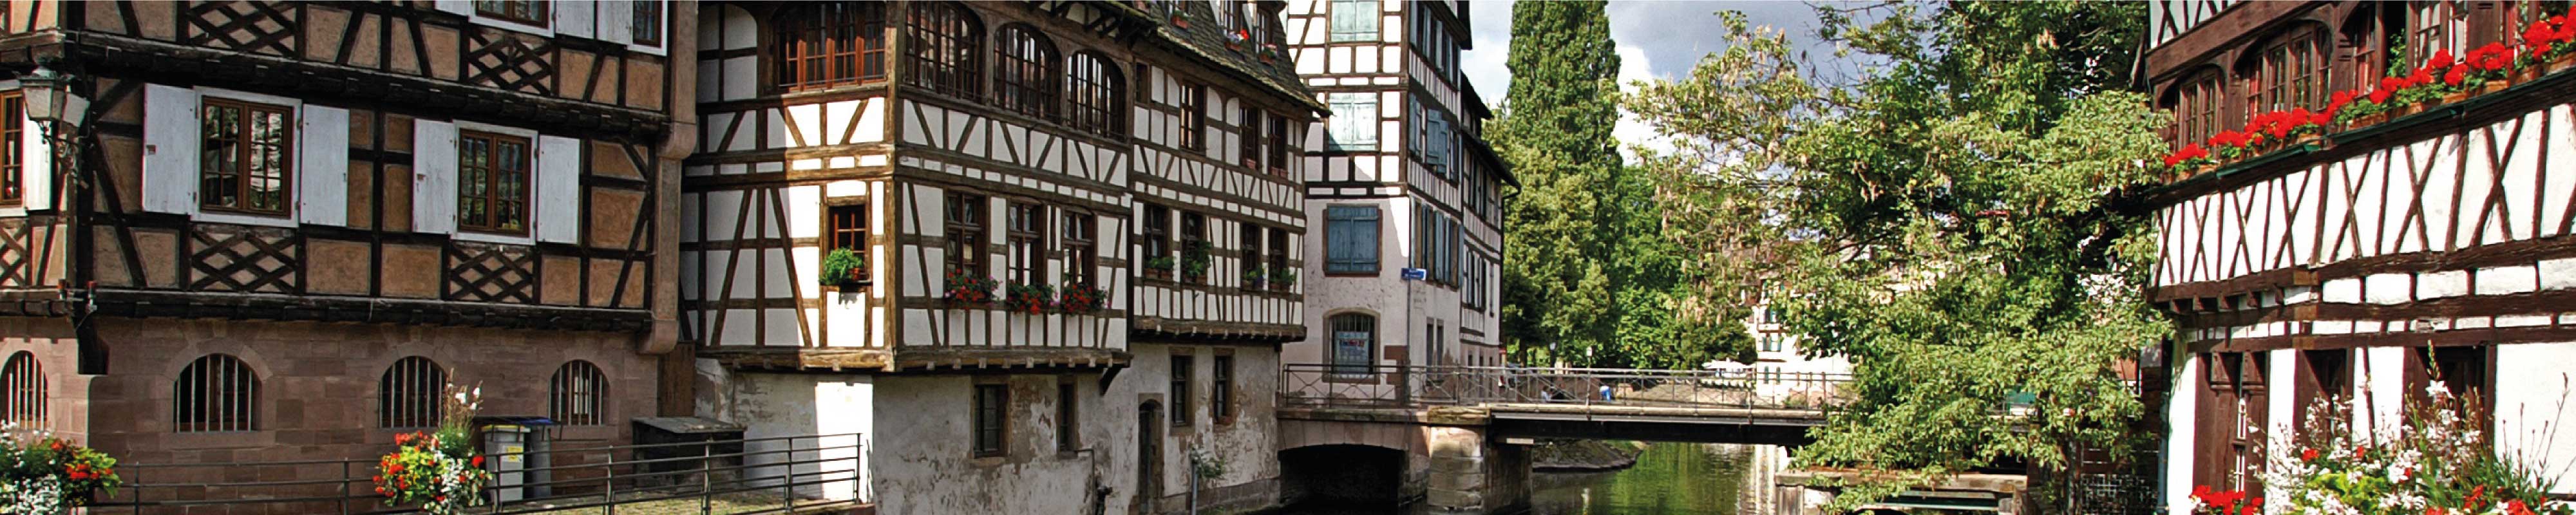 Luggage Storage | La Petite France in Strasbourg - Nannybag